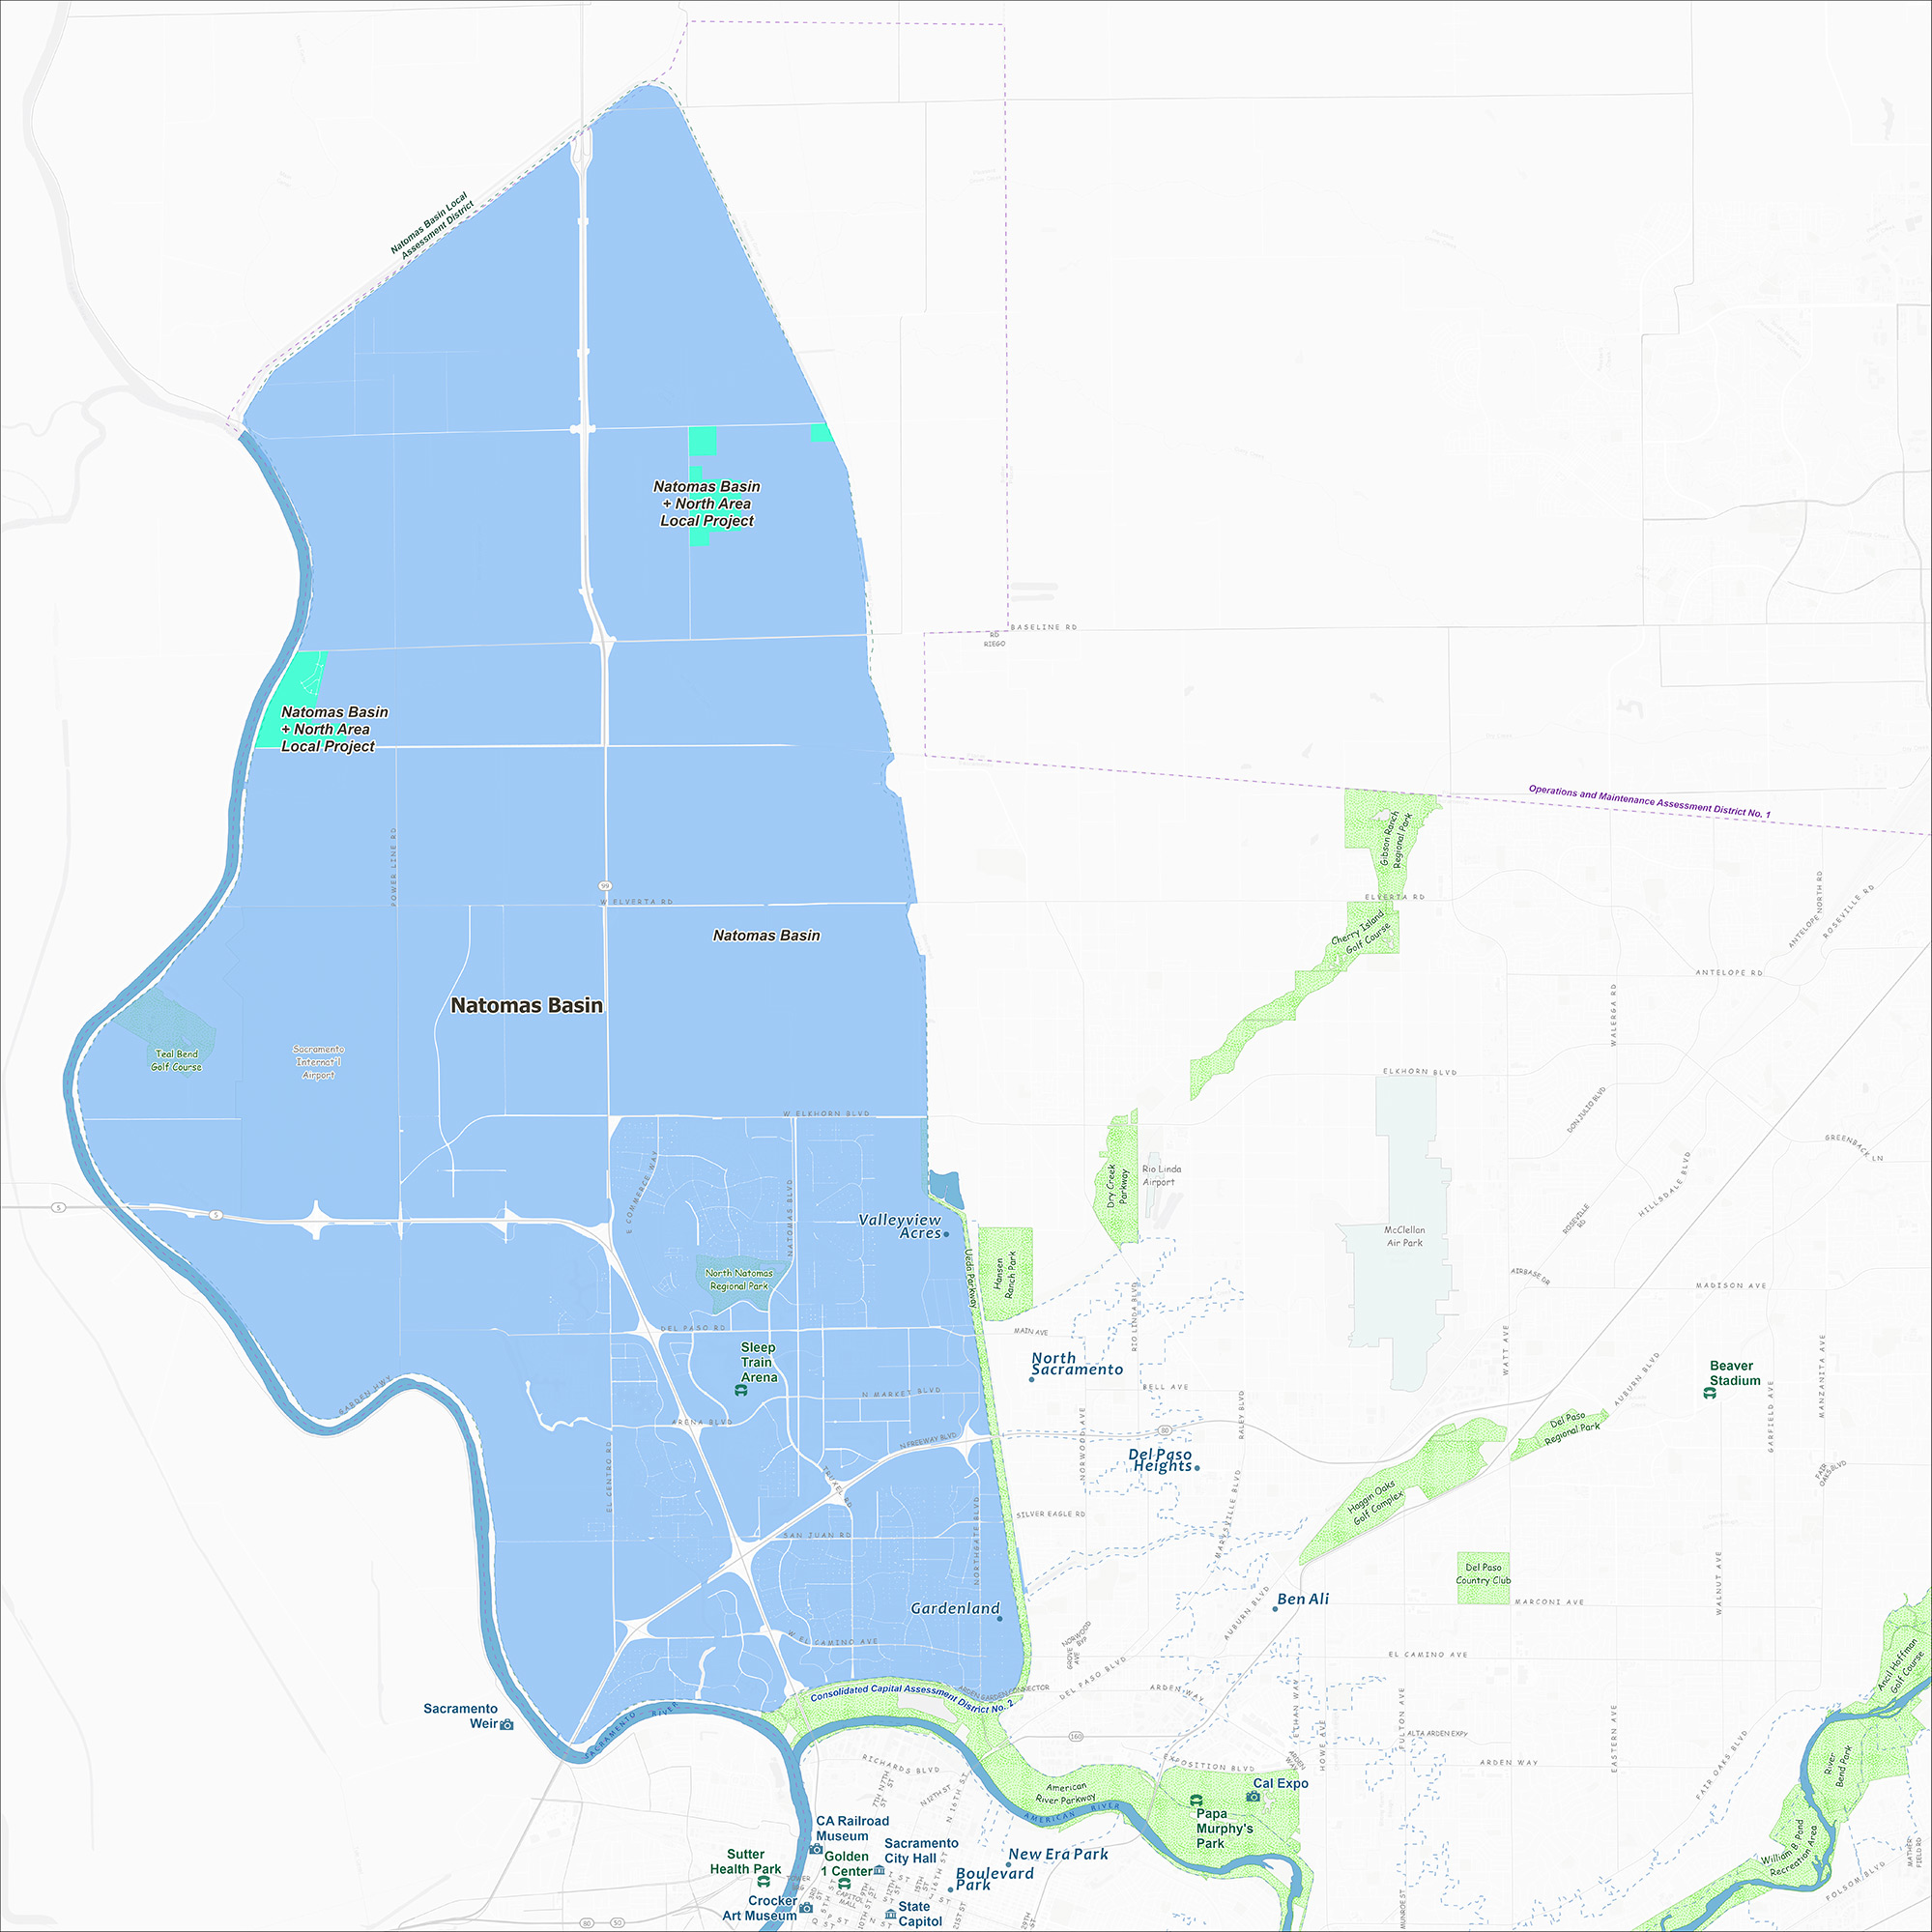 Raising Cane's Natomas Sacramento location plans stopped